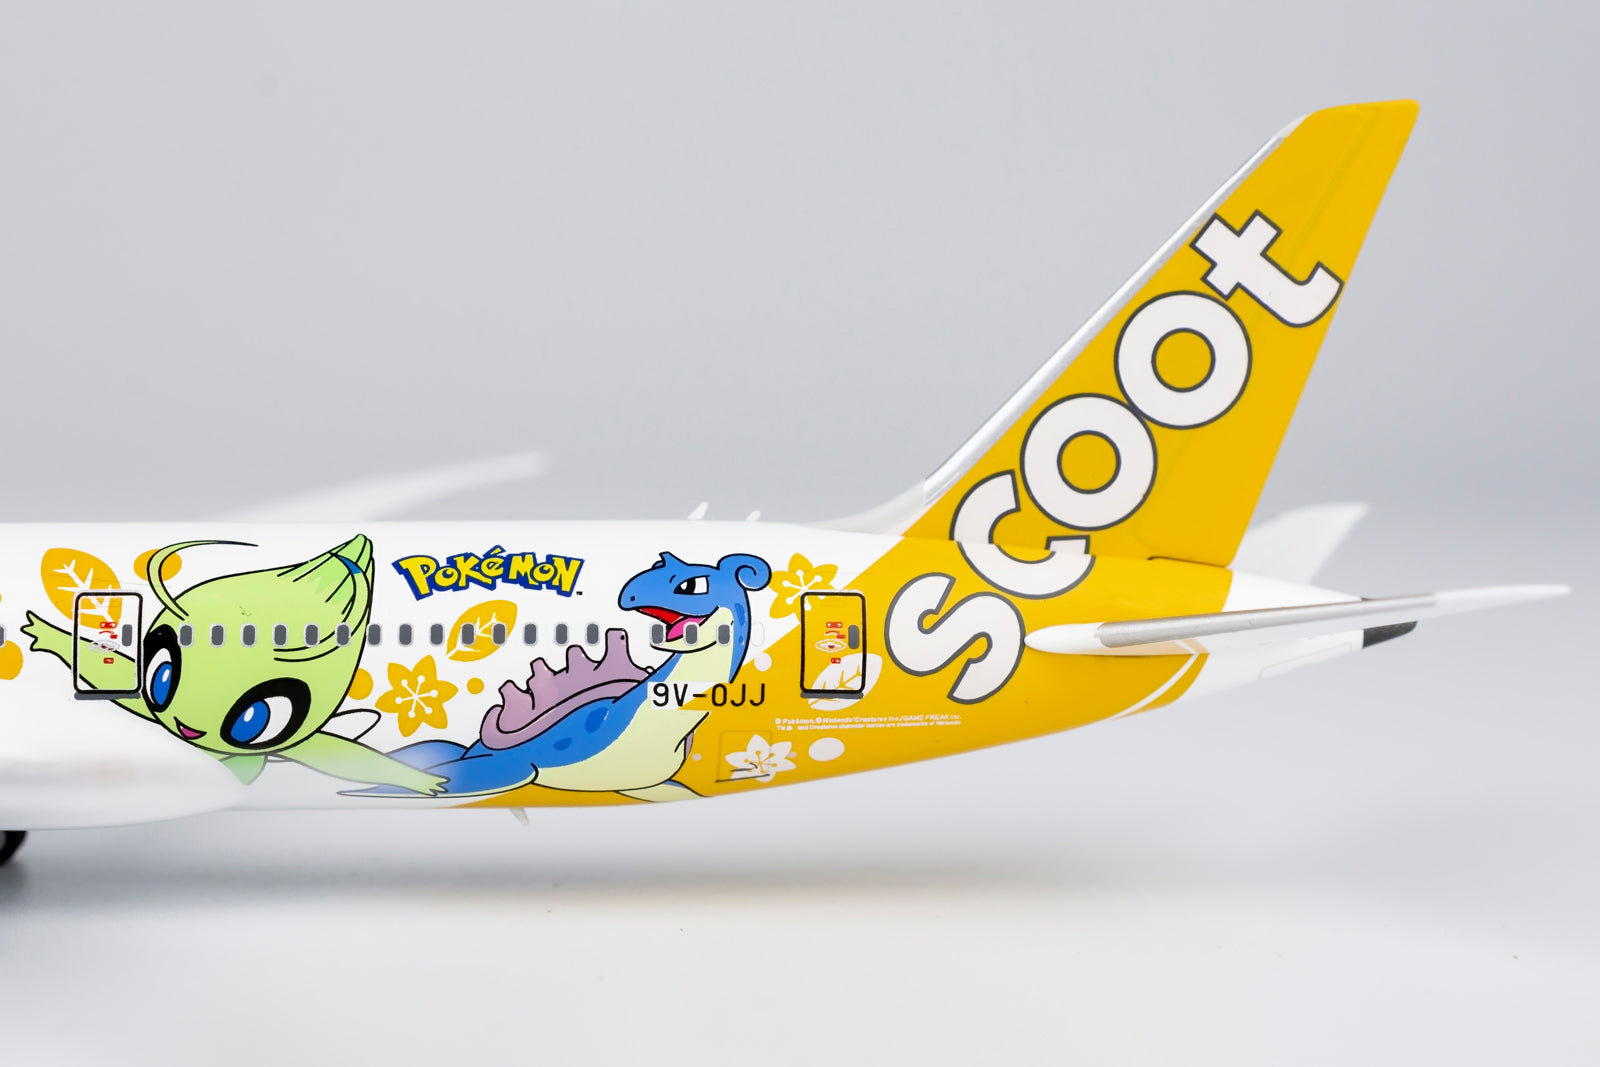 1/400 Scoot B 787-9 